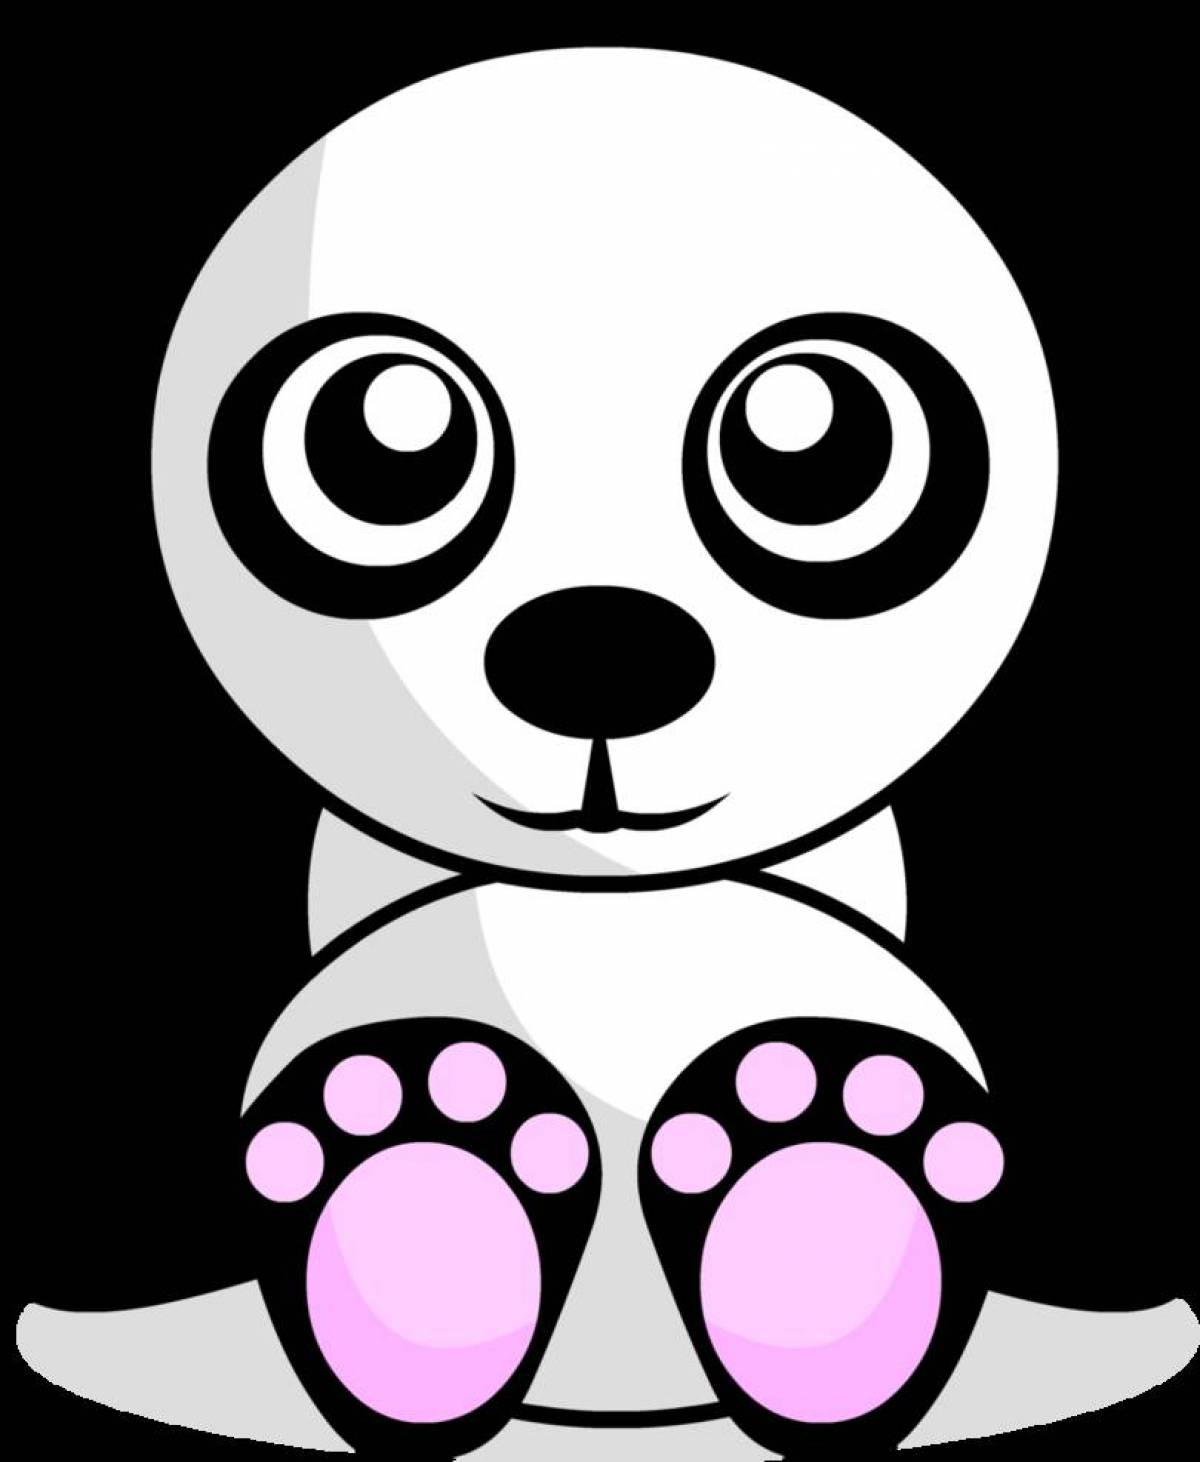 Adorable panda coloring page